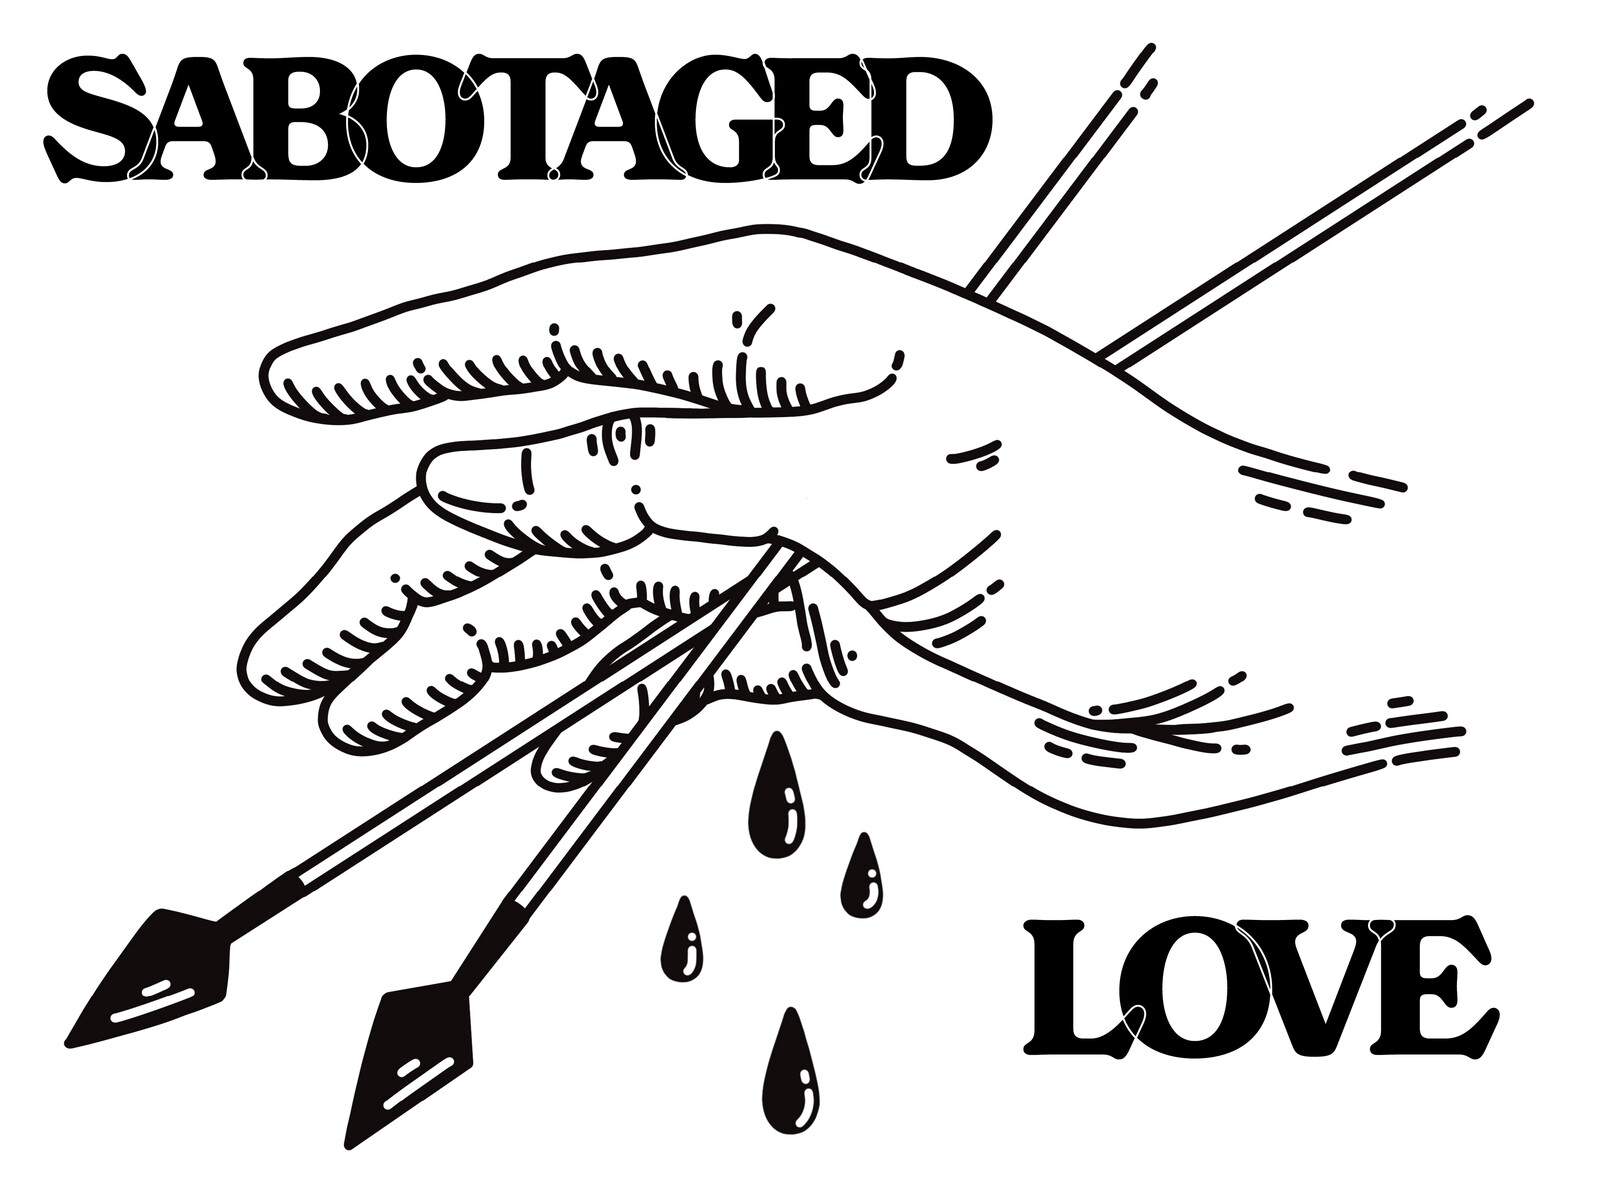 Sabotaged Love 
Type thumbnail 1

Adobe Illustrator
Procreate